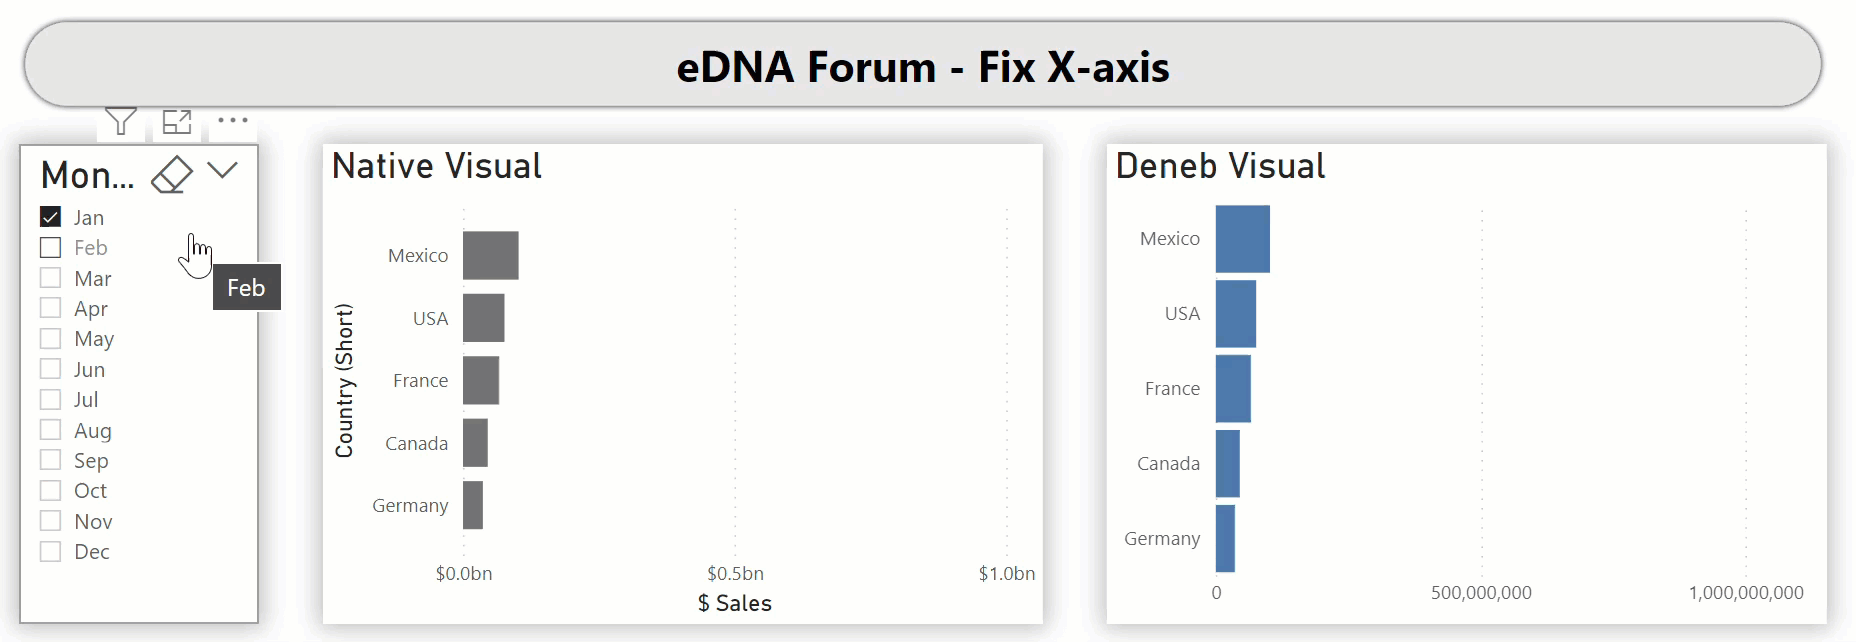 eDNA Forum - Fix X-axis